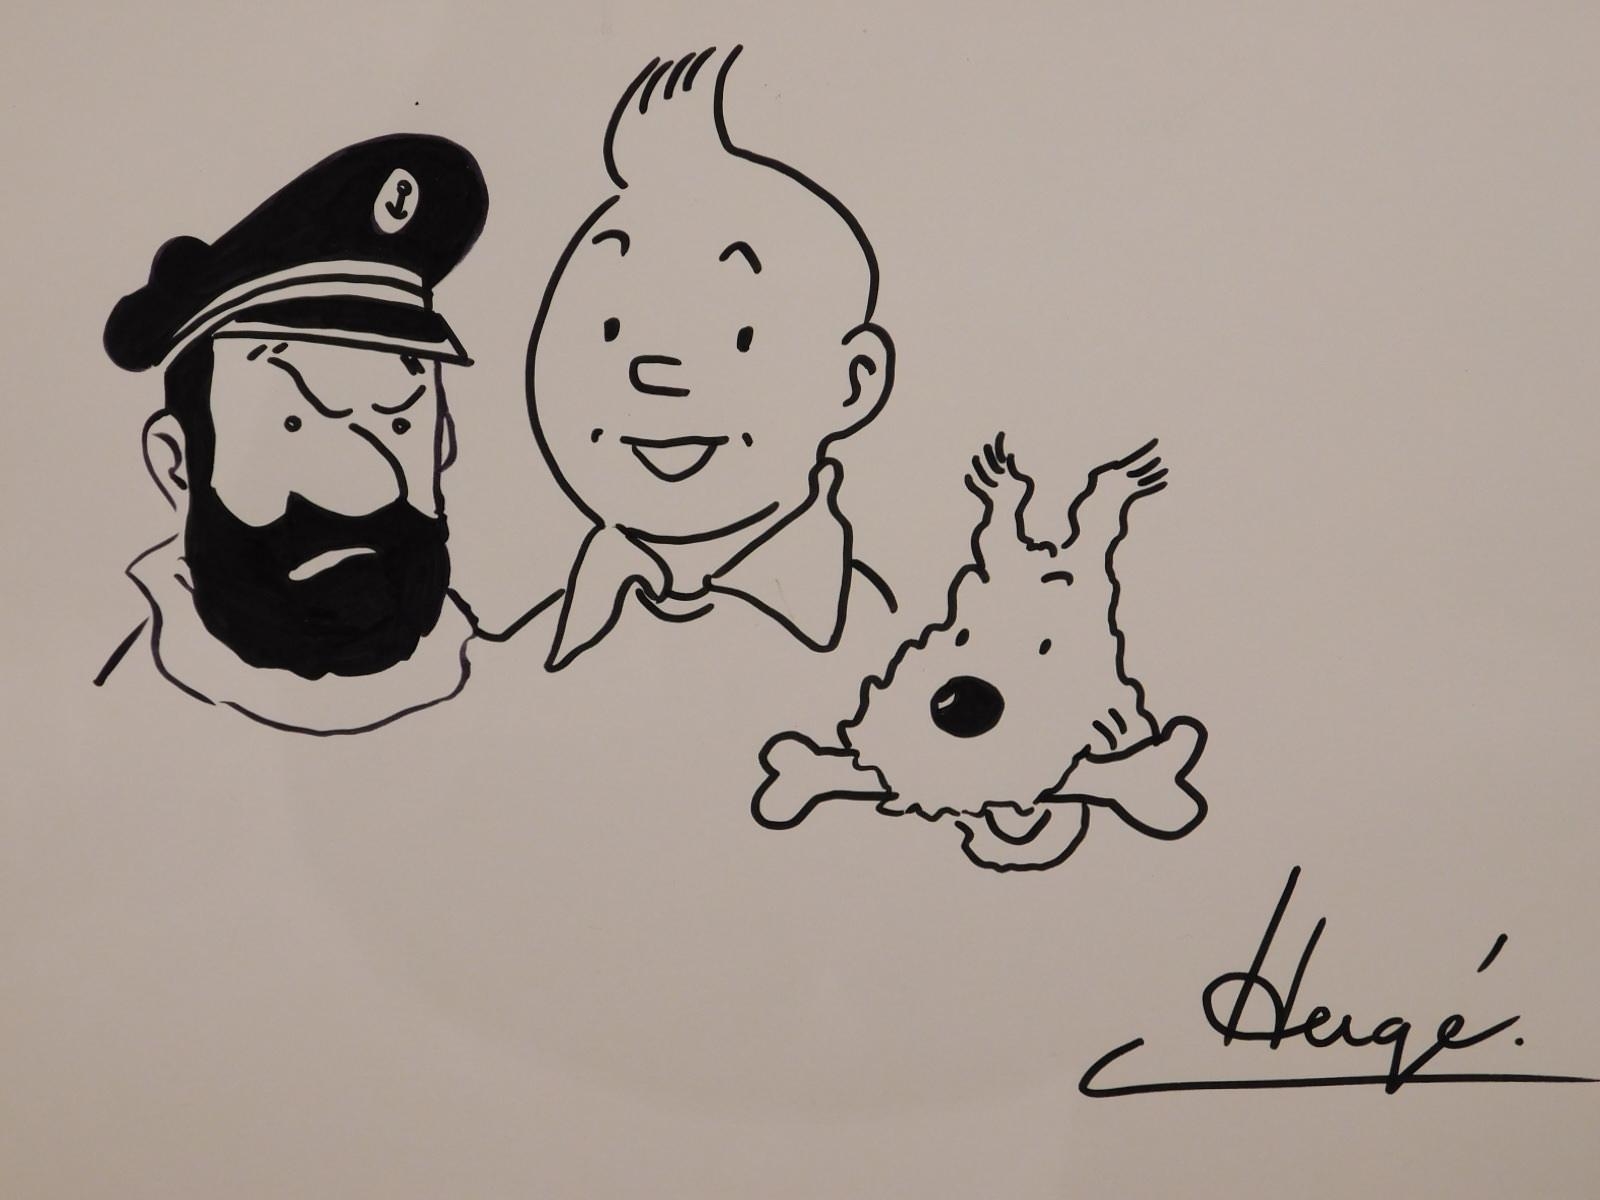 Tintin, Captain Haddock and Snowy by Hergé